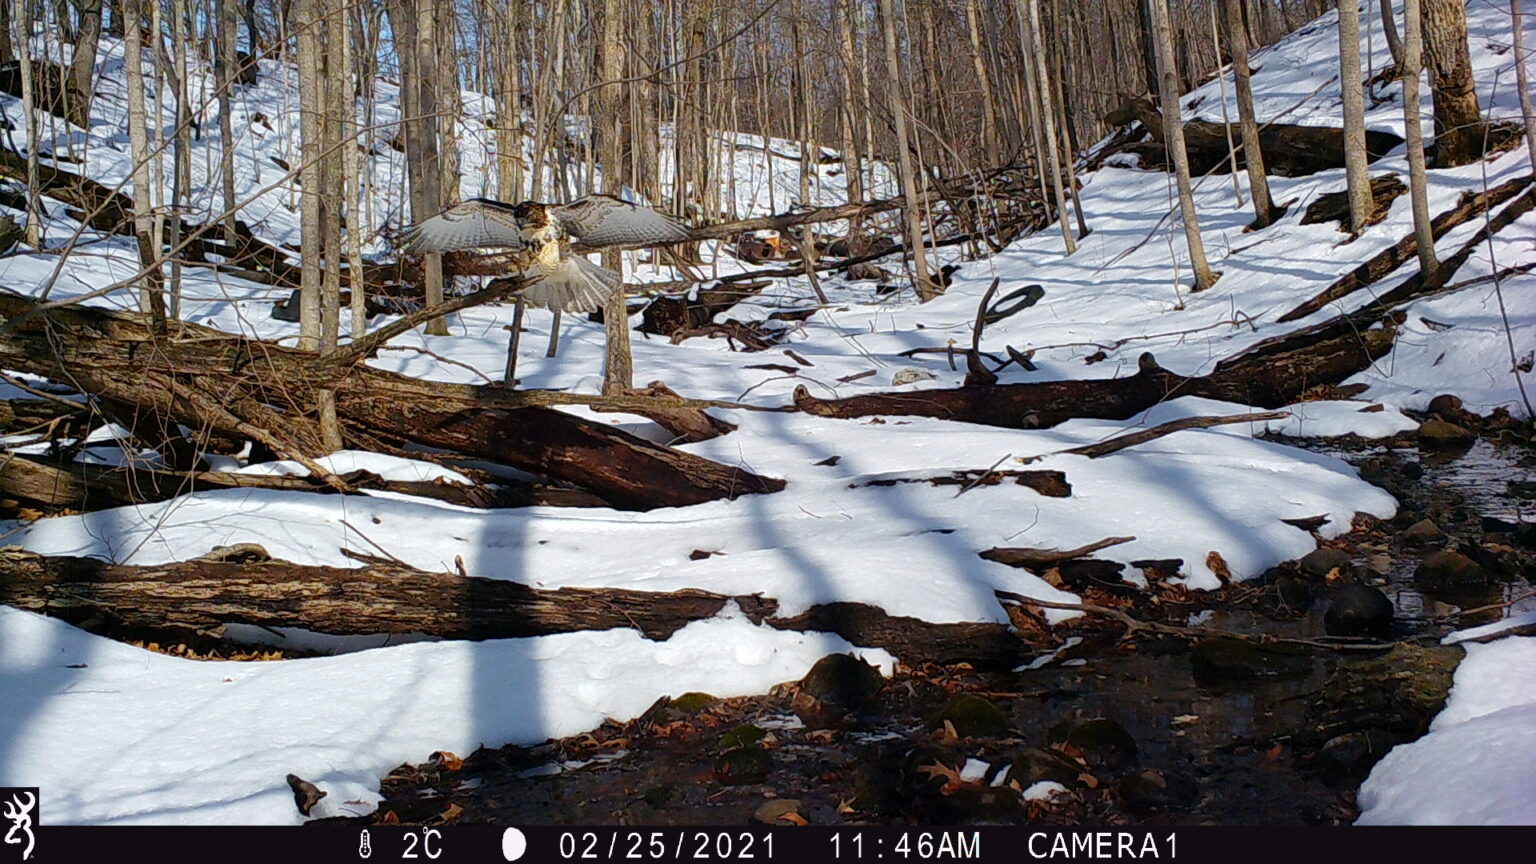 A hawk hunts in the snowy woods